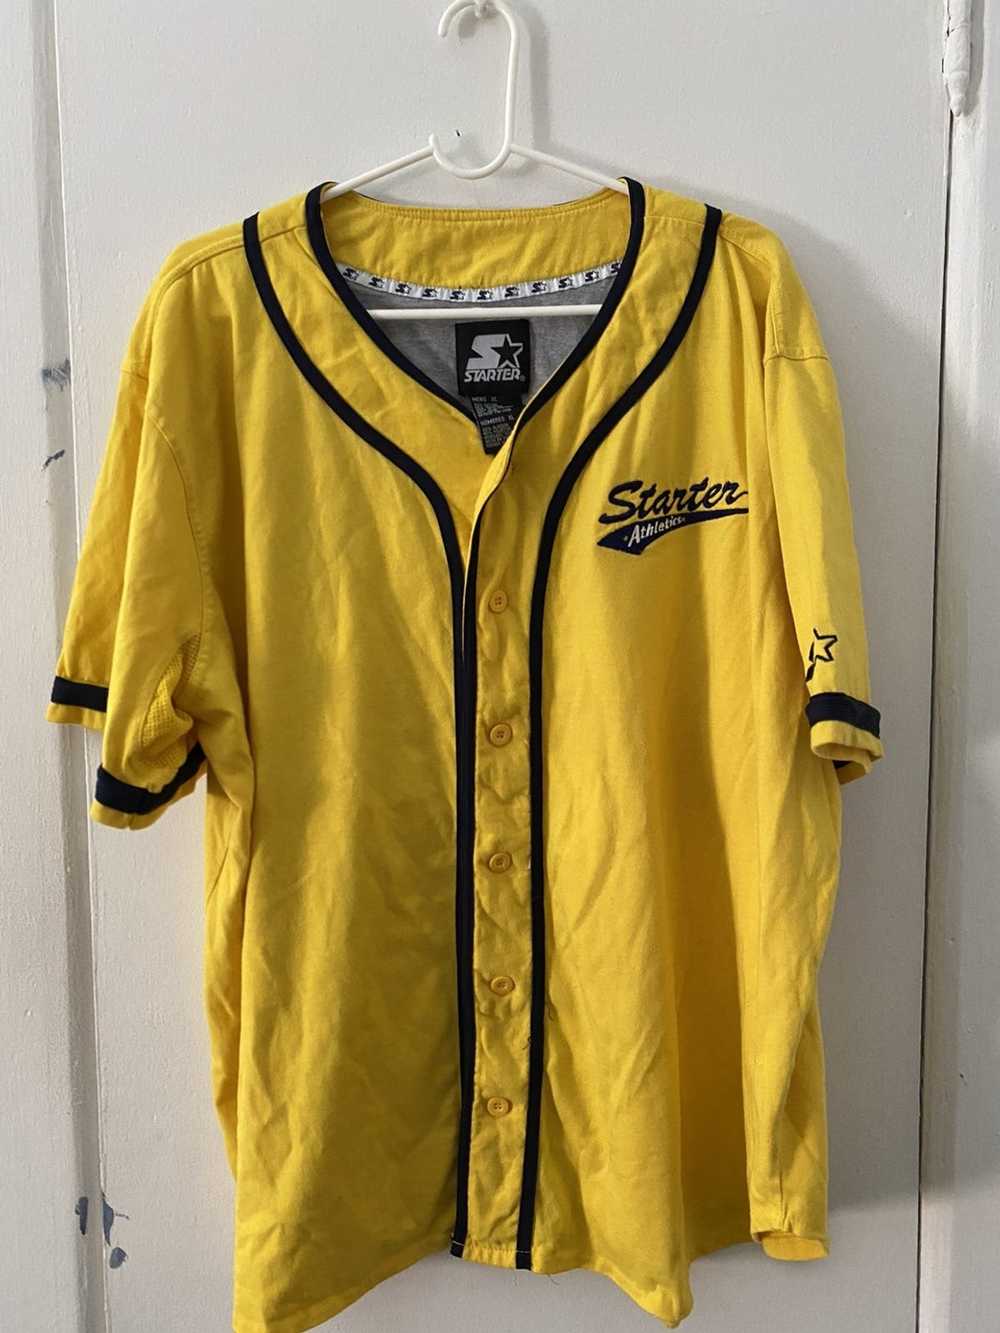 Starter Yellow starter baseball jersey - image 1